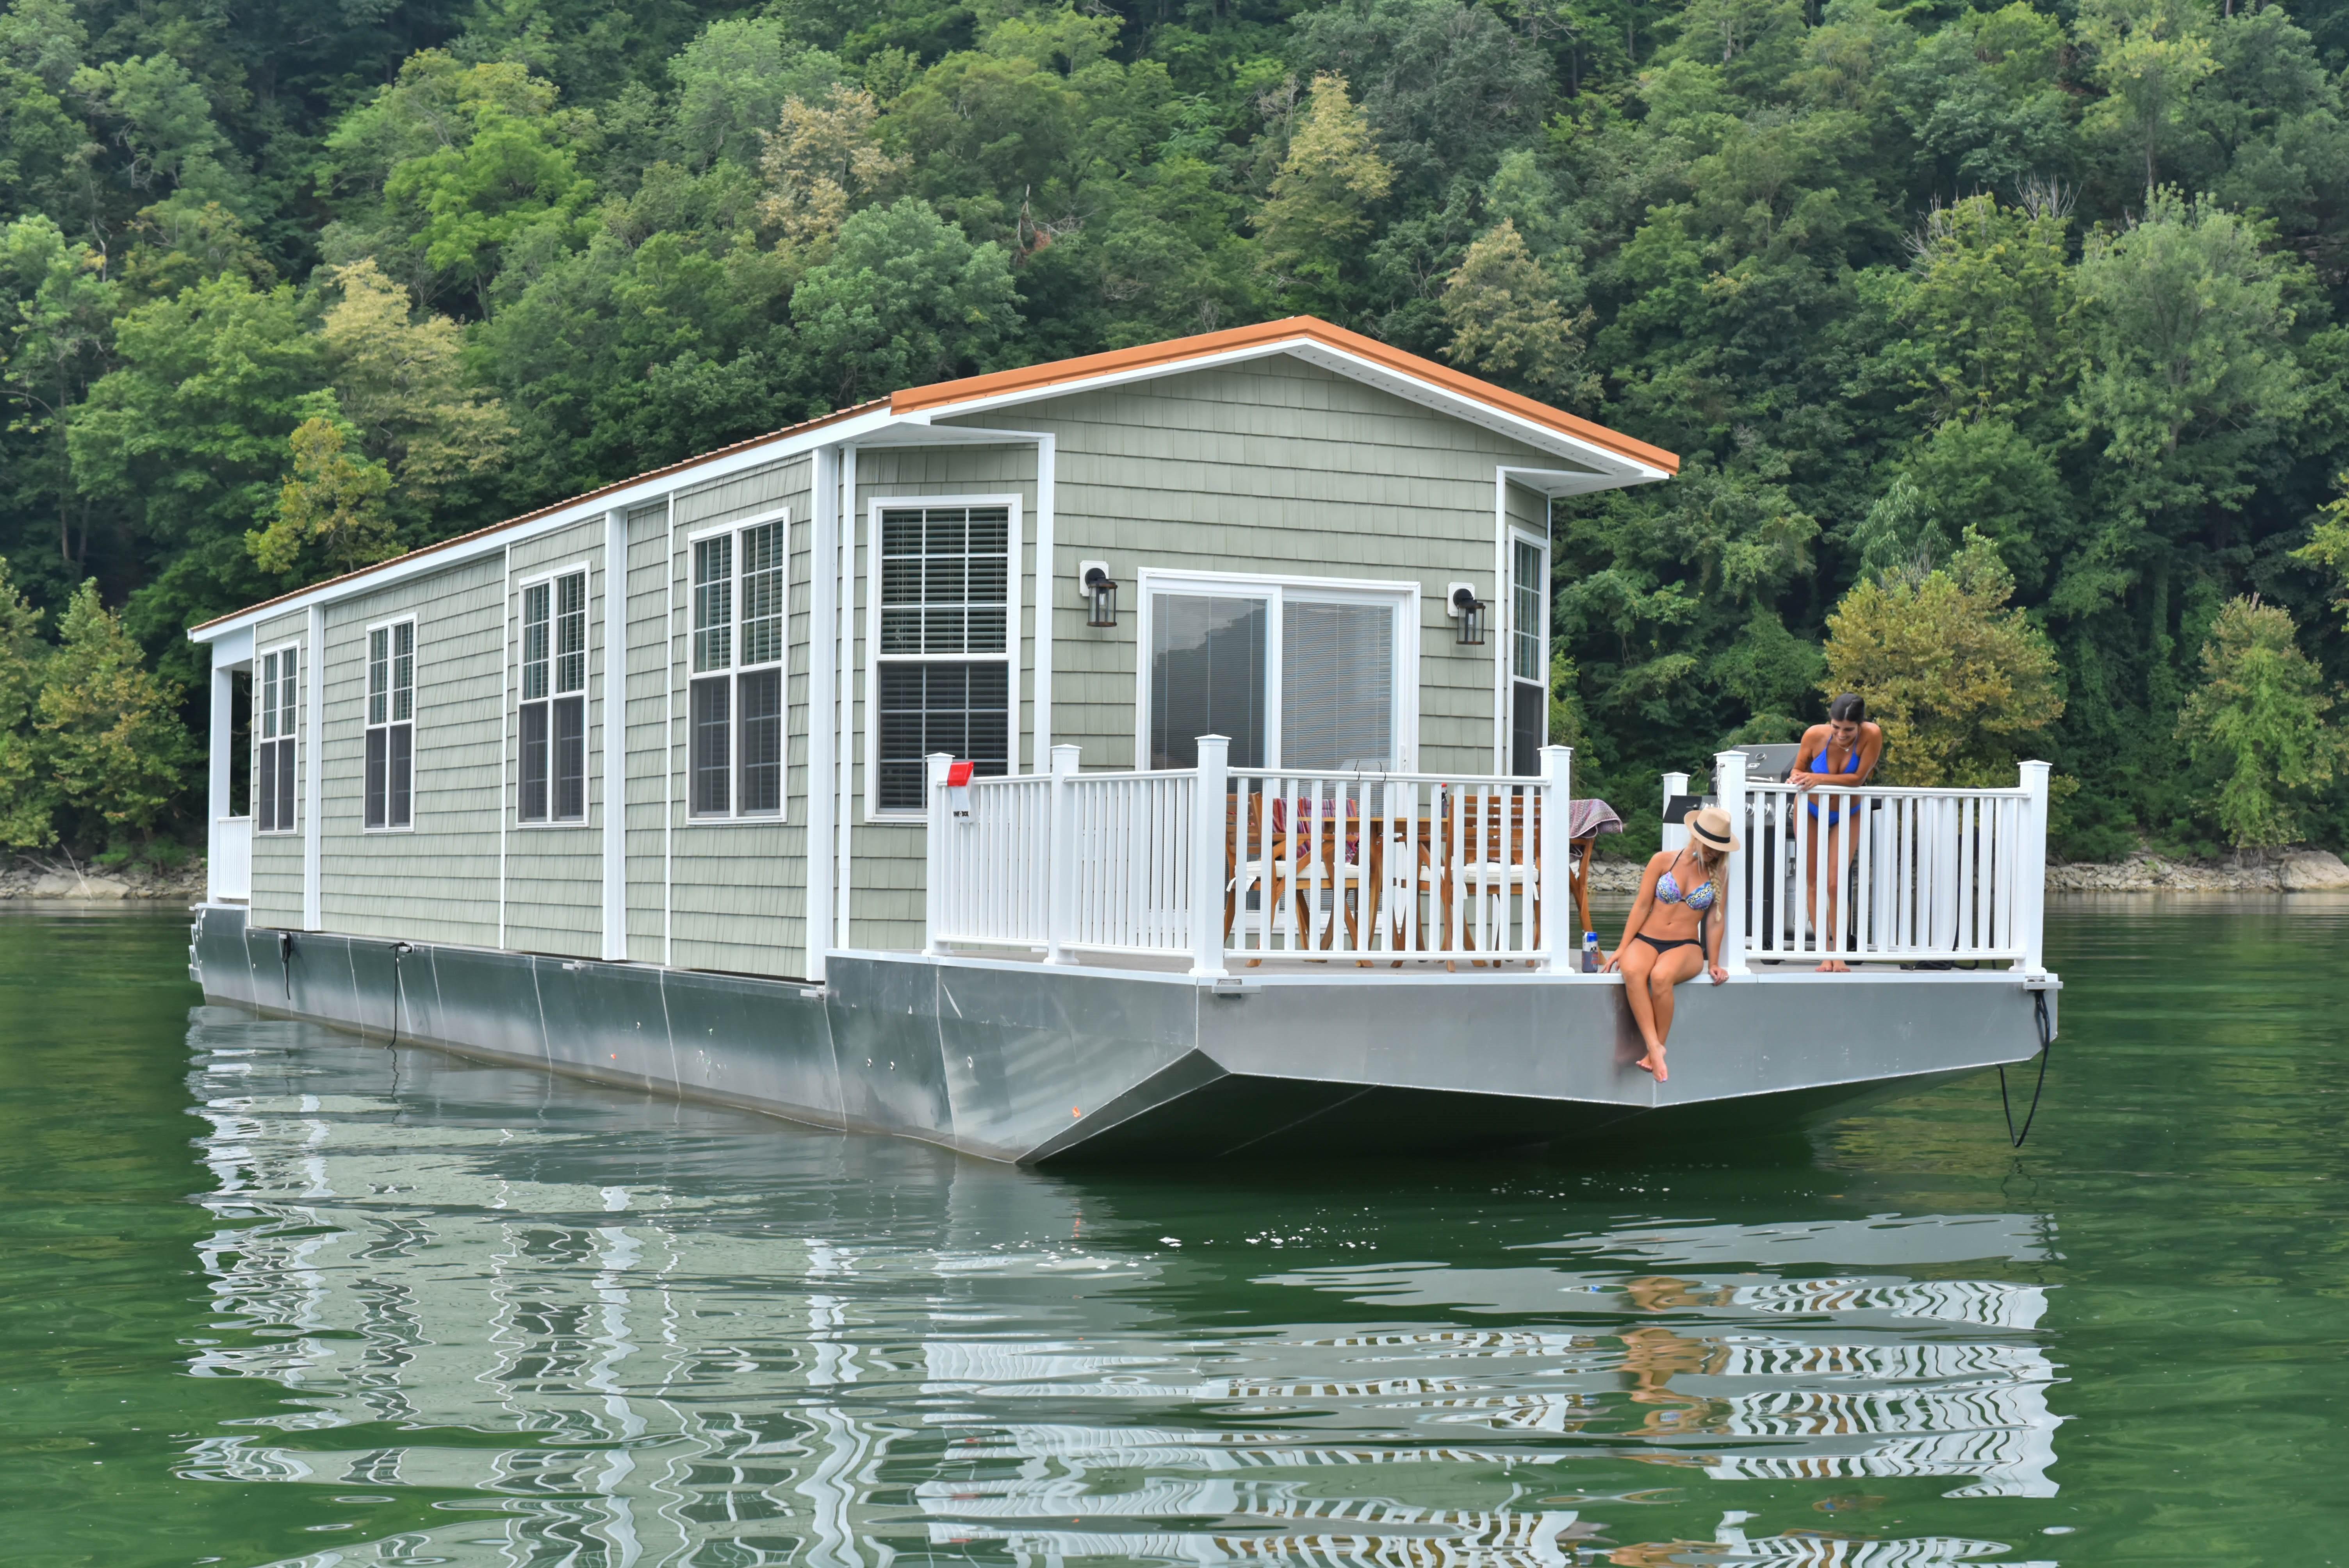 2017 Harbor Cottage Houseboat, Nancy Kentucky - boats.com